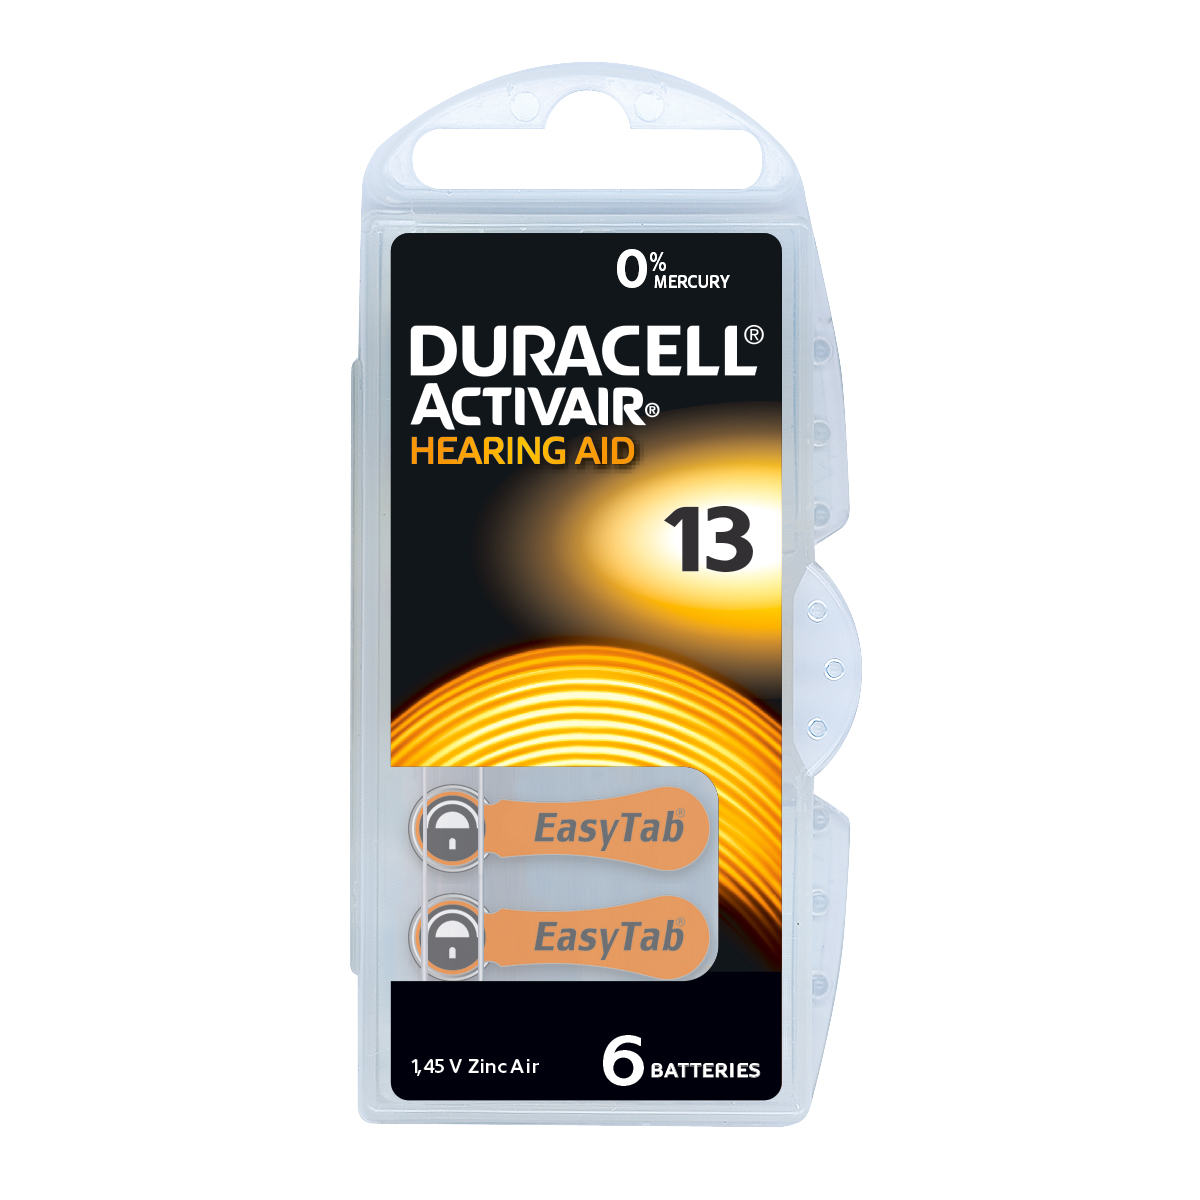 Duracell Activair Pack 6 Hearing aid batteries Zinc Air No. 13, blister